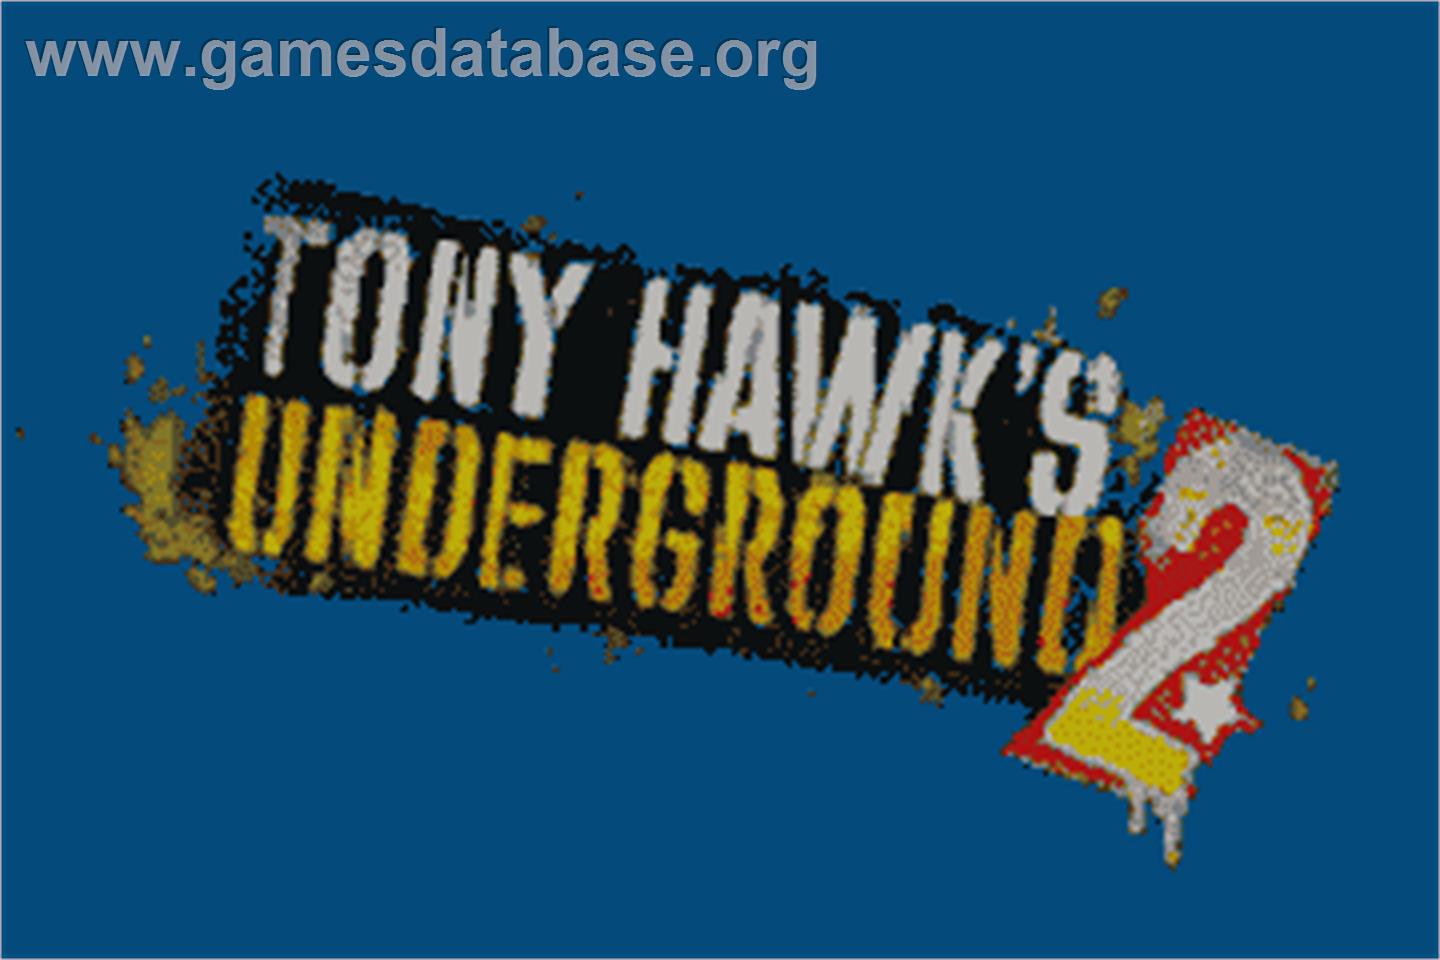 Tony Hawk's Underground 2 - Nintendo Game Boy Advance - Artwork - Title Screen